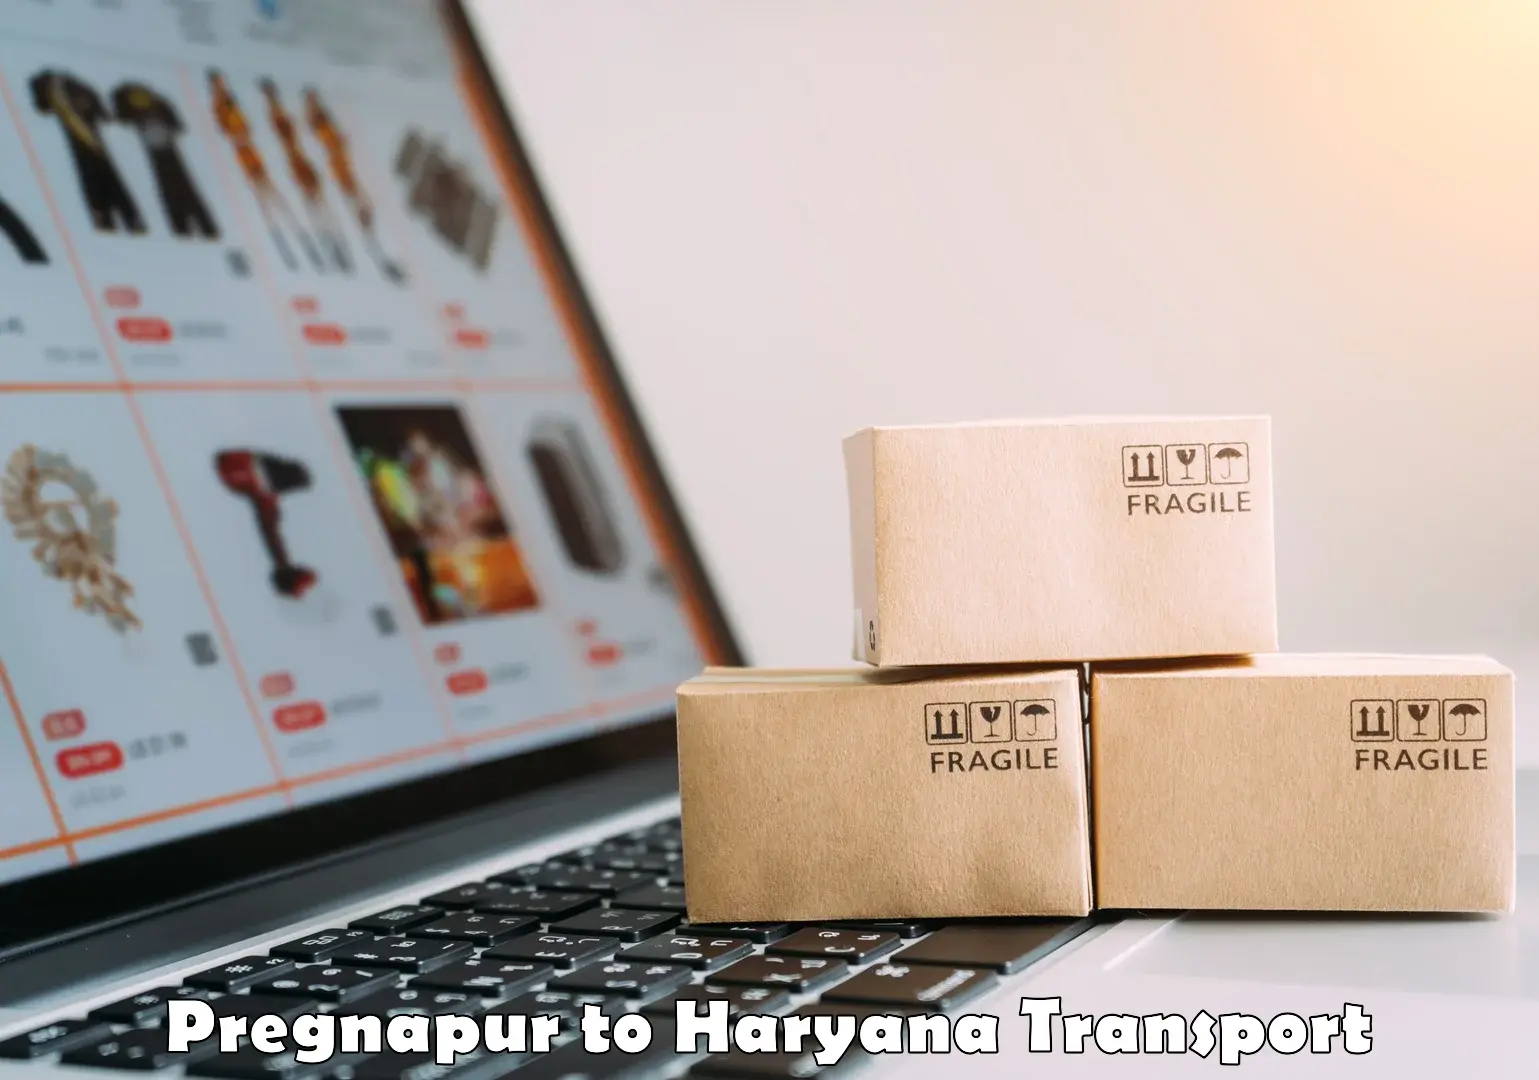 Online transport booking Pregnapur to Hansi